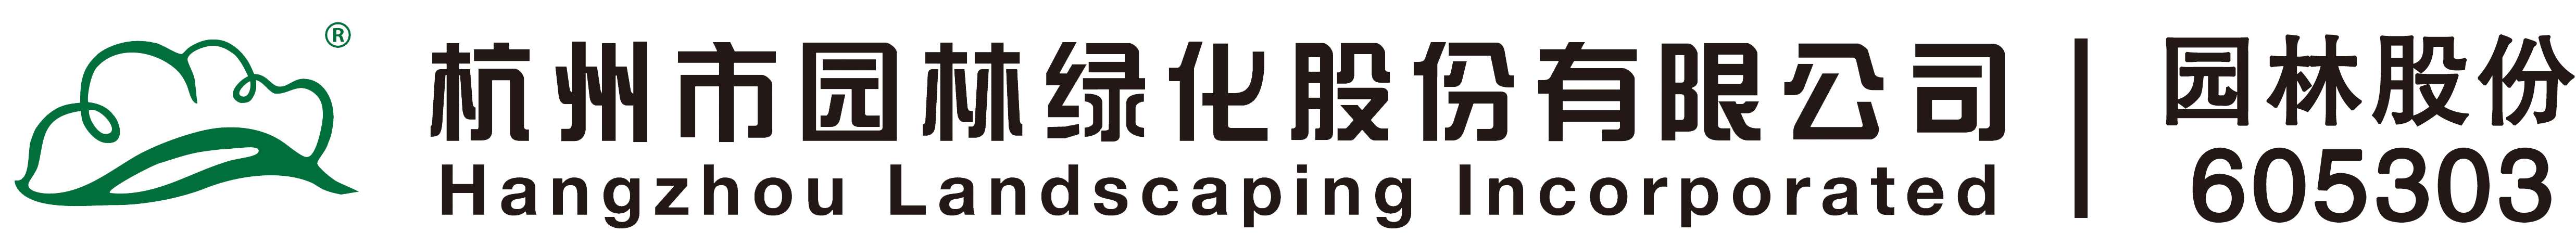 Hangzhou Landscaping Co., Ltd.